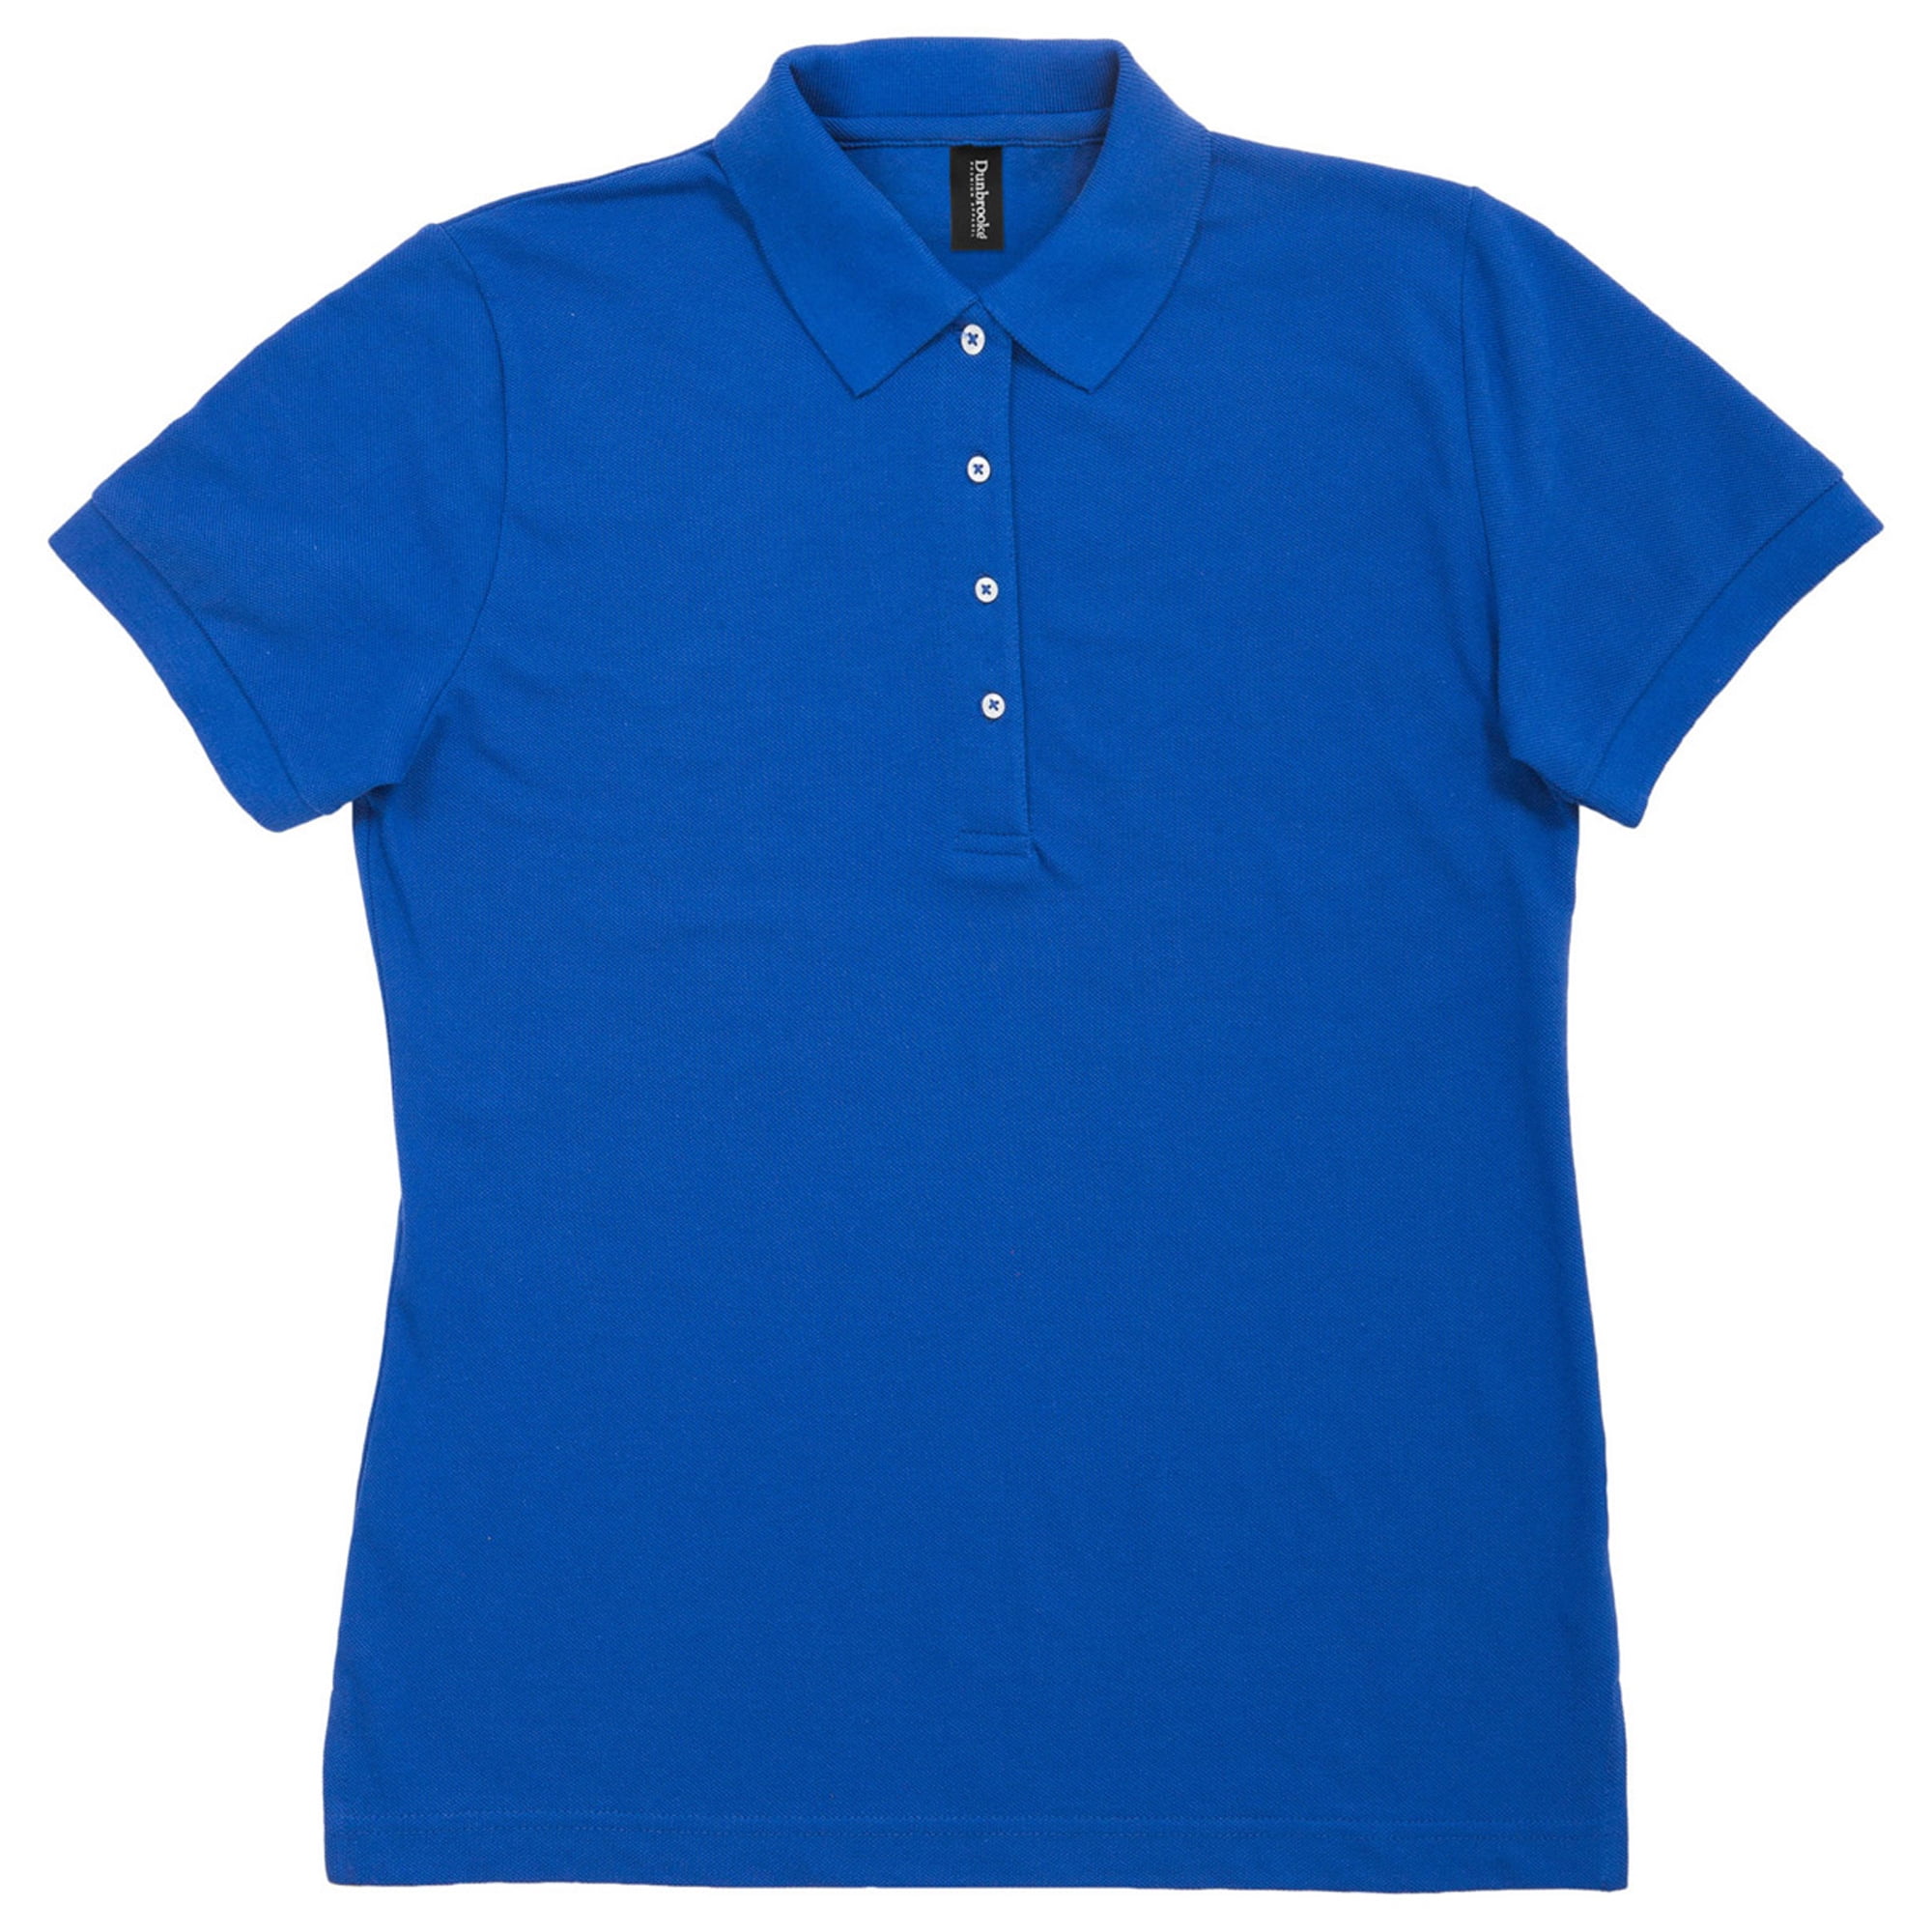 Dunbrooke Women's Contoured Collar Pique Polo Shirt - Walmart.com